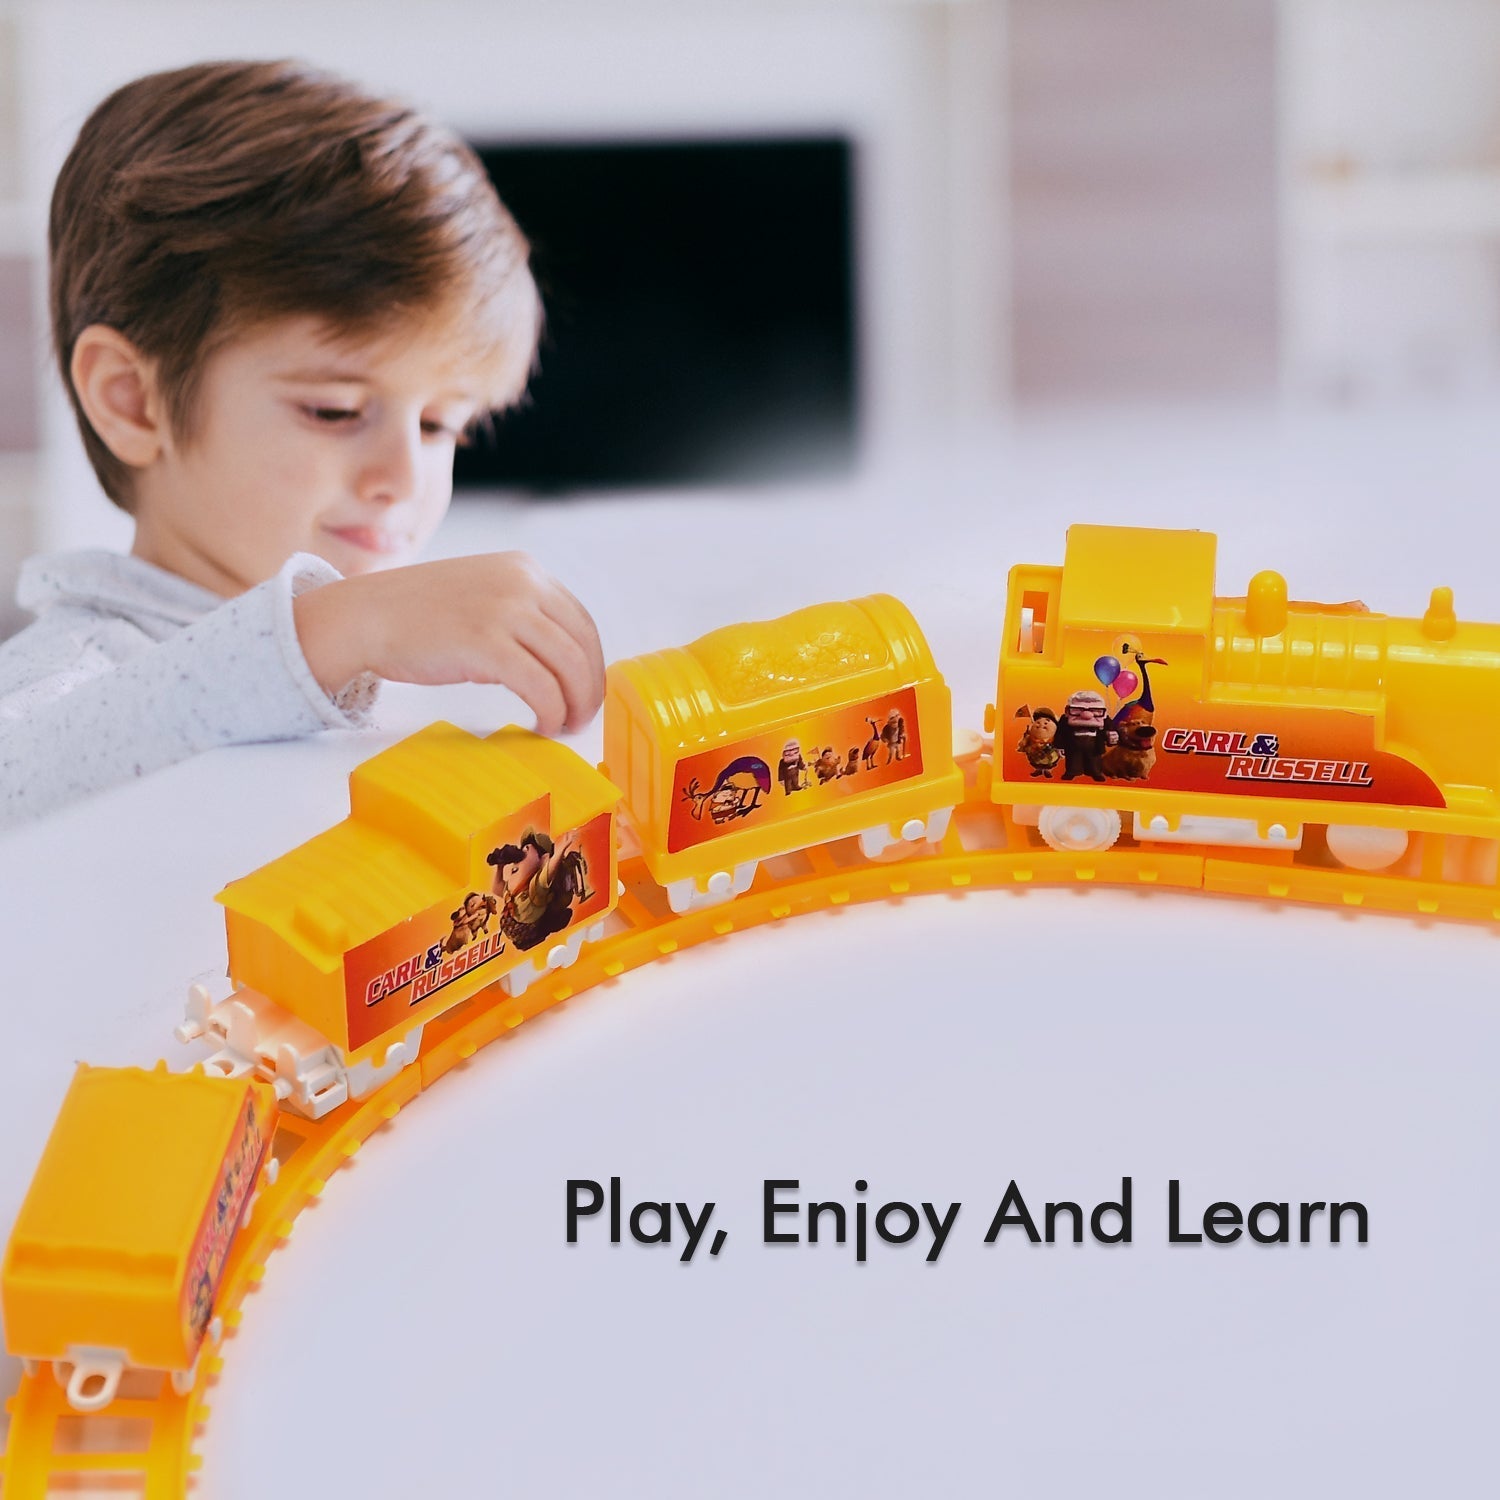 4472 Kids Toy Train High Speed Big Train Play Set Toy Battery Operated Train Set DeoDap